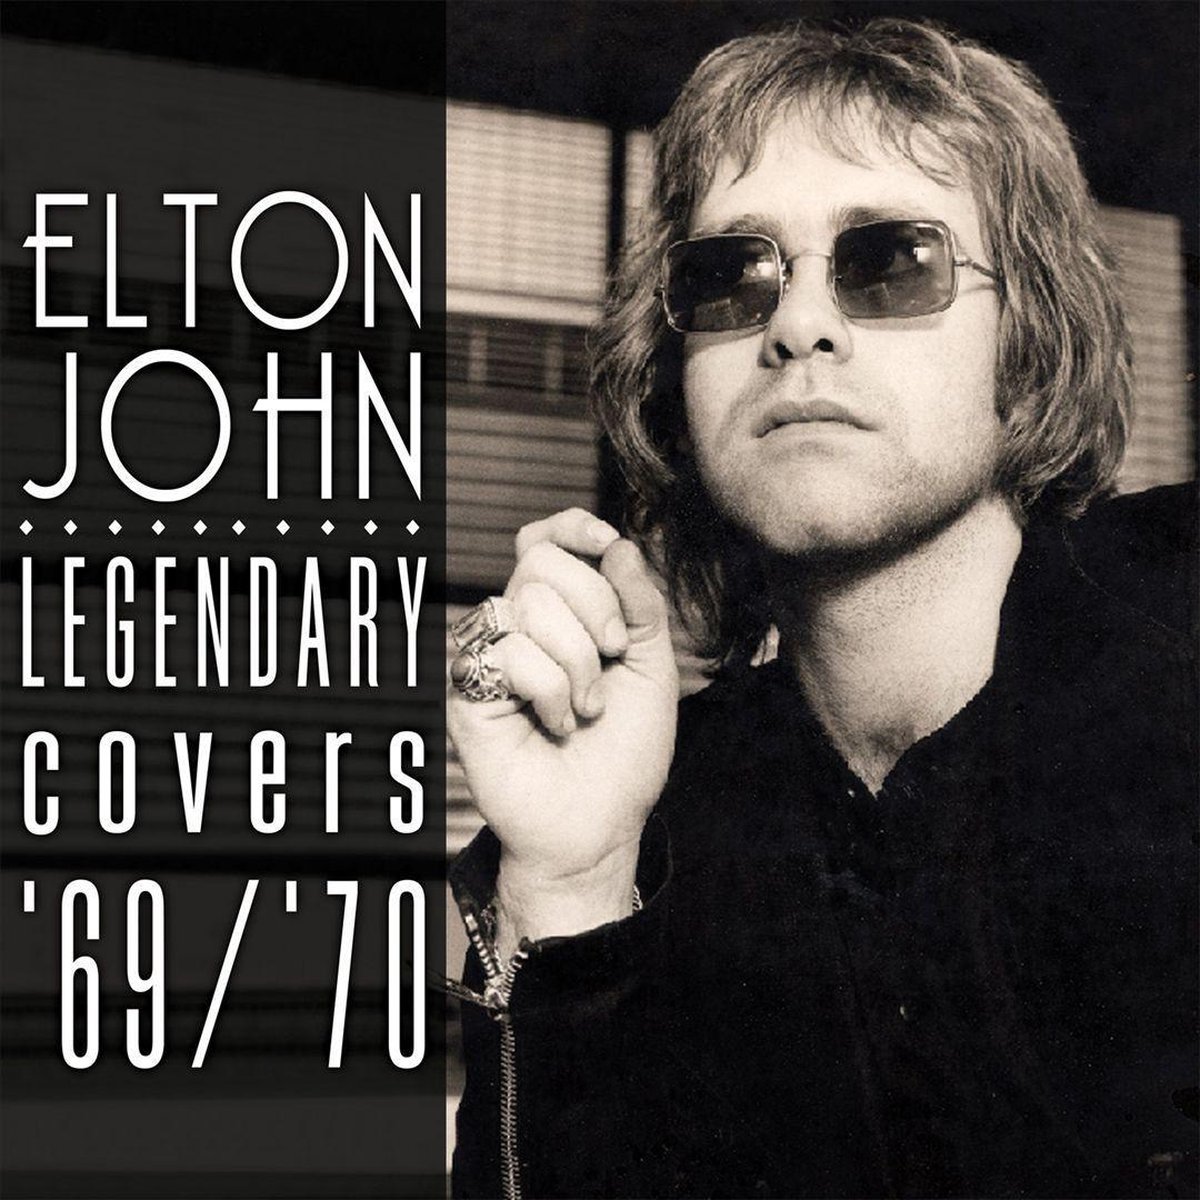 elton john album cover with car